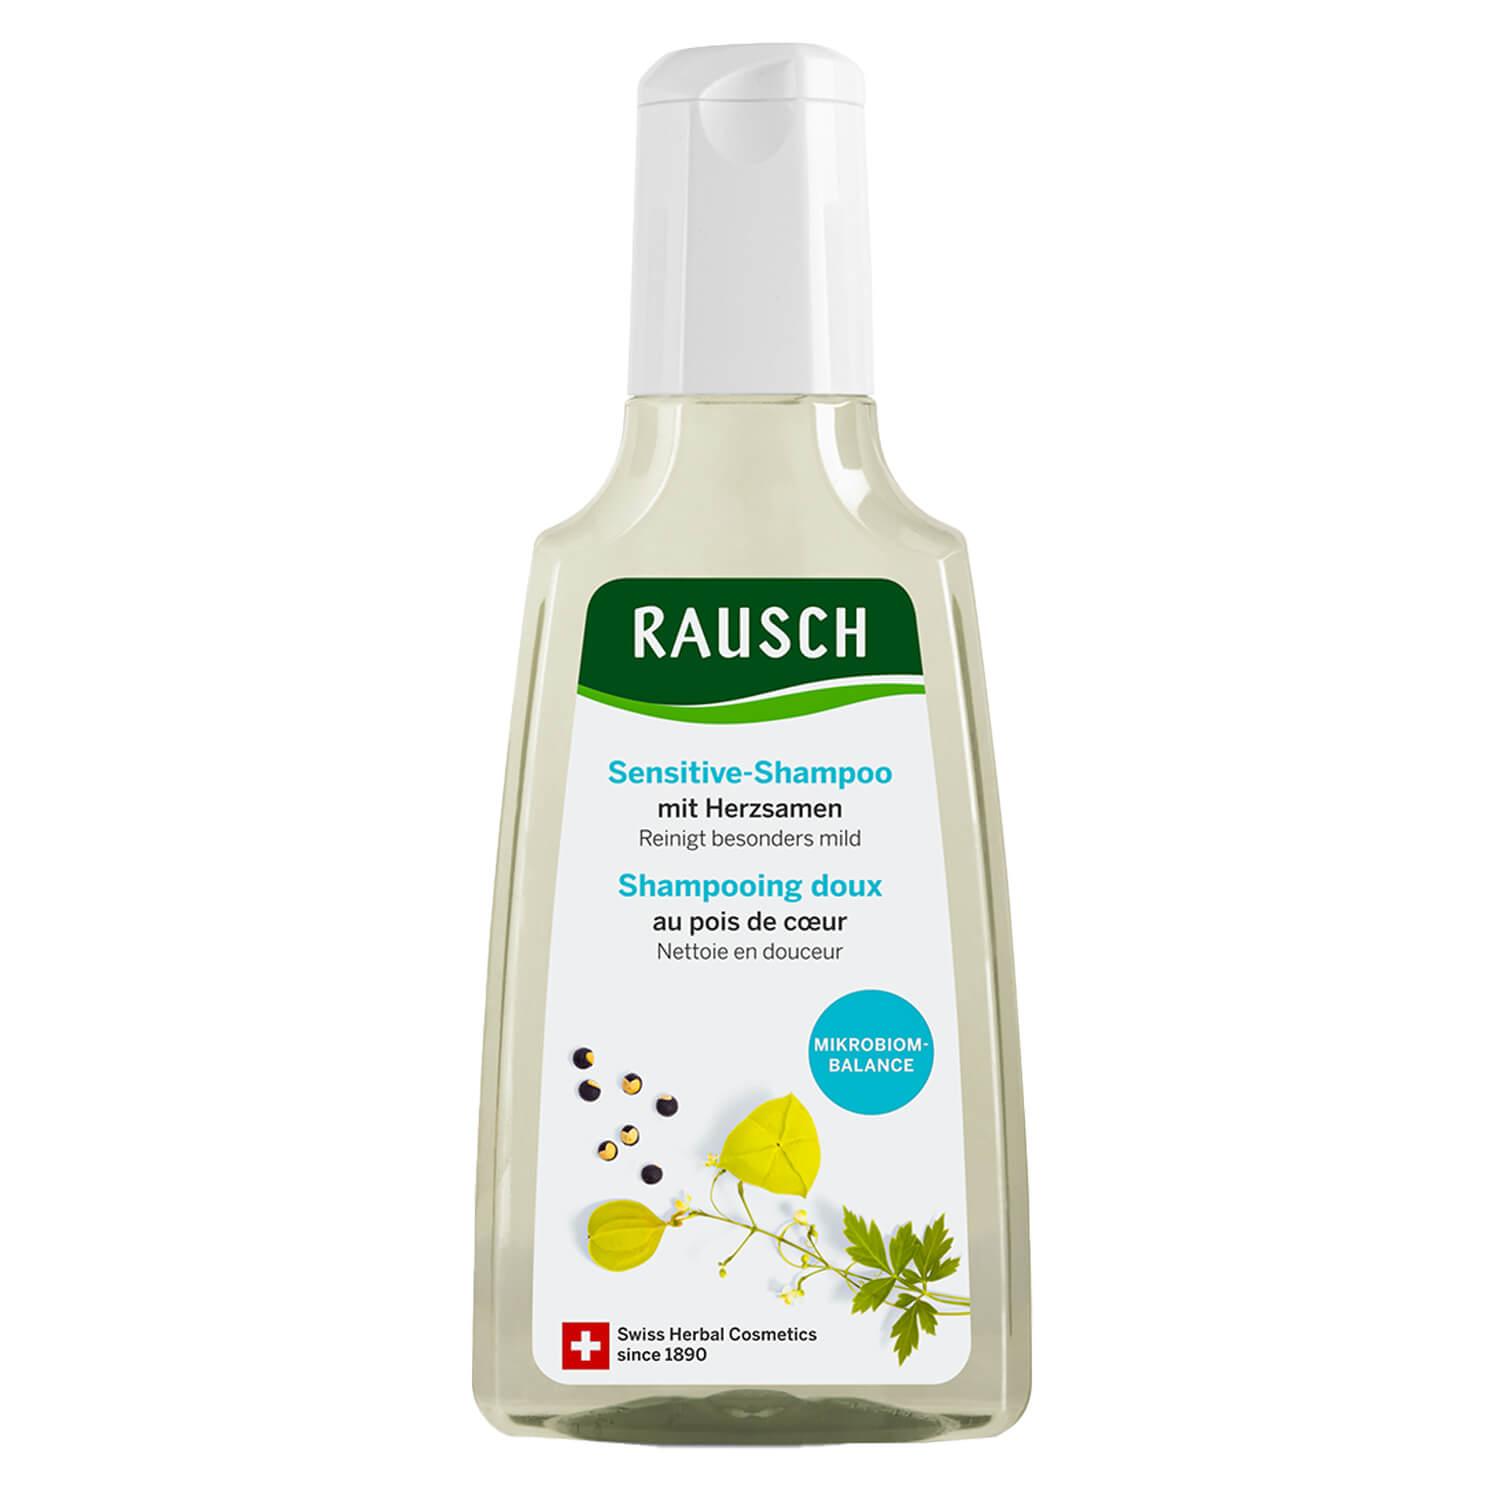 RAUSCH - Sensitive shampoo with heartseed